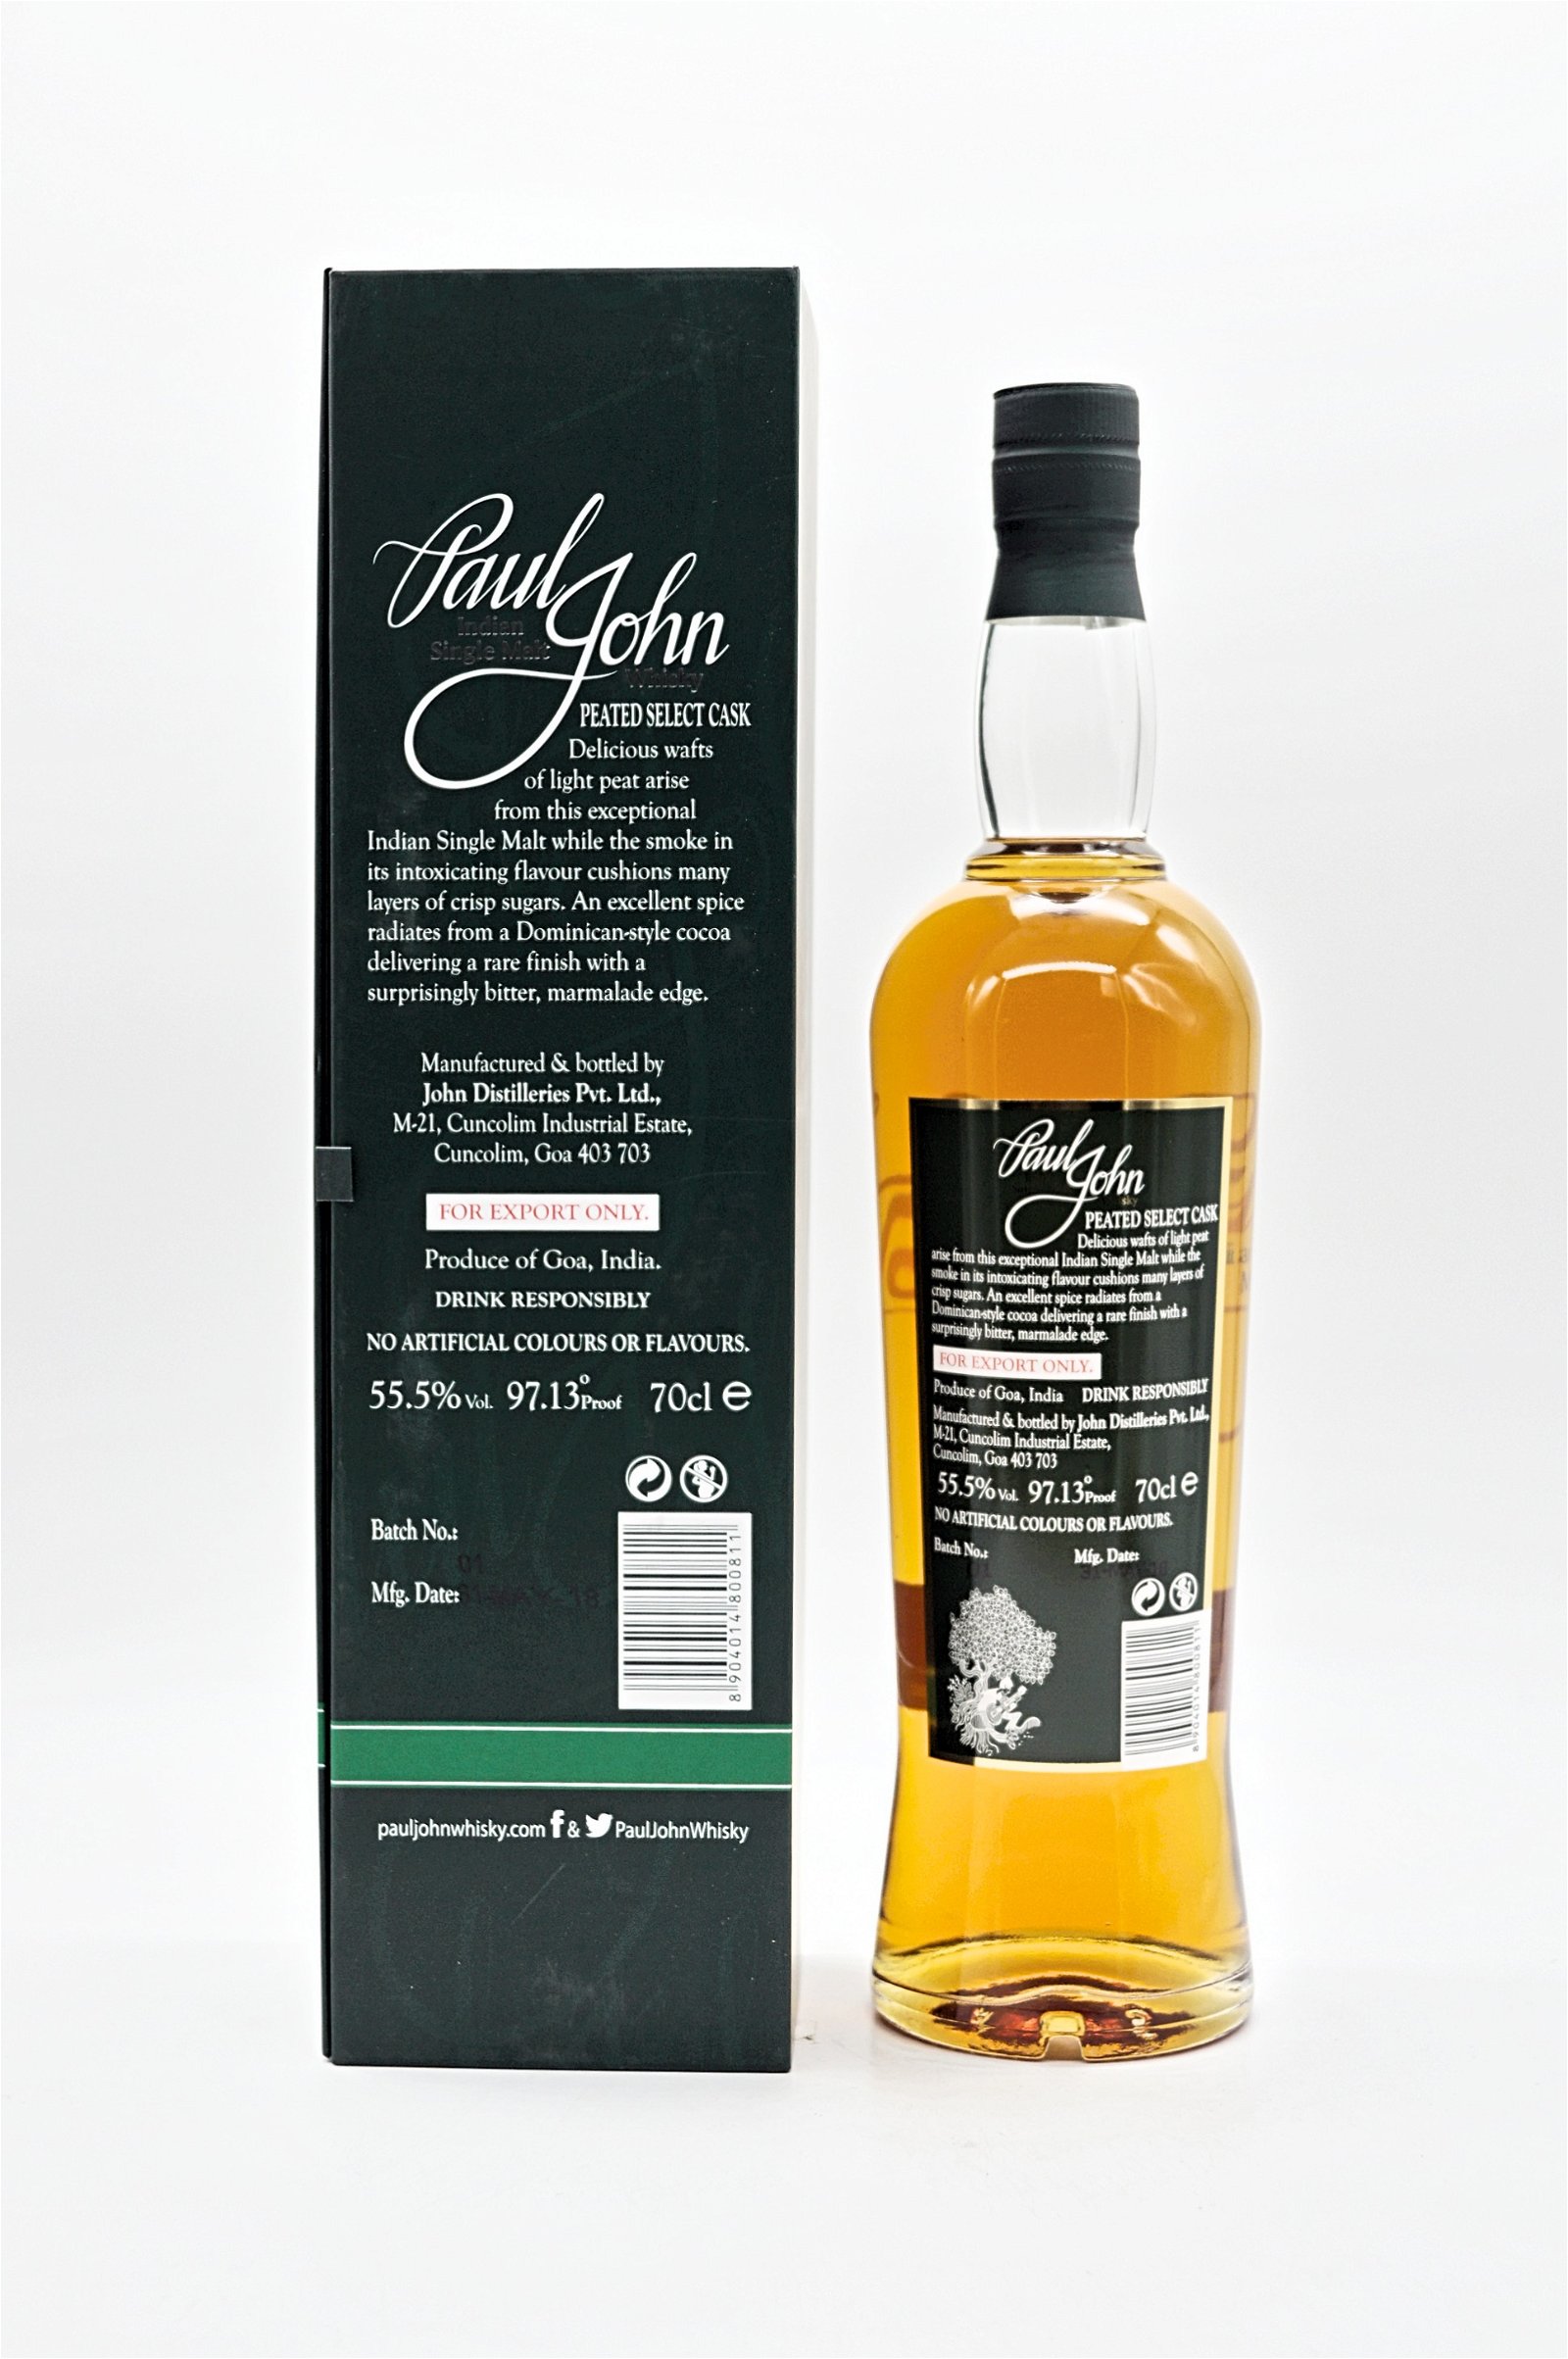 Paul John Peated Select Cask Indian Single Malt Whisky